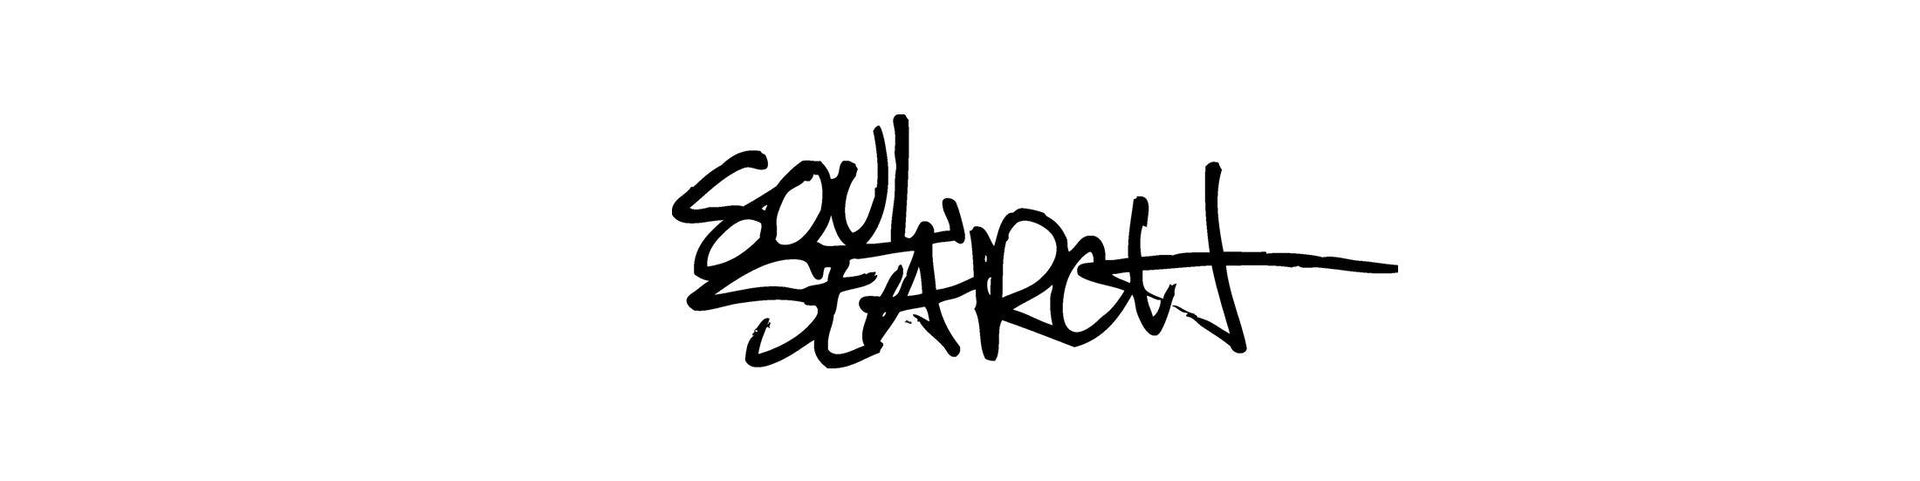 Shop – Soul Search – Band & Music Merch – Cold Cuts Merch